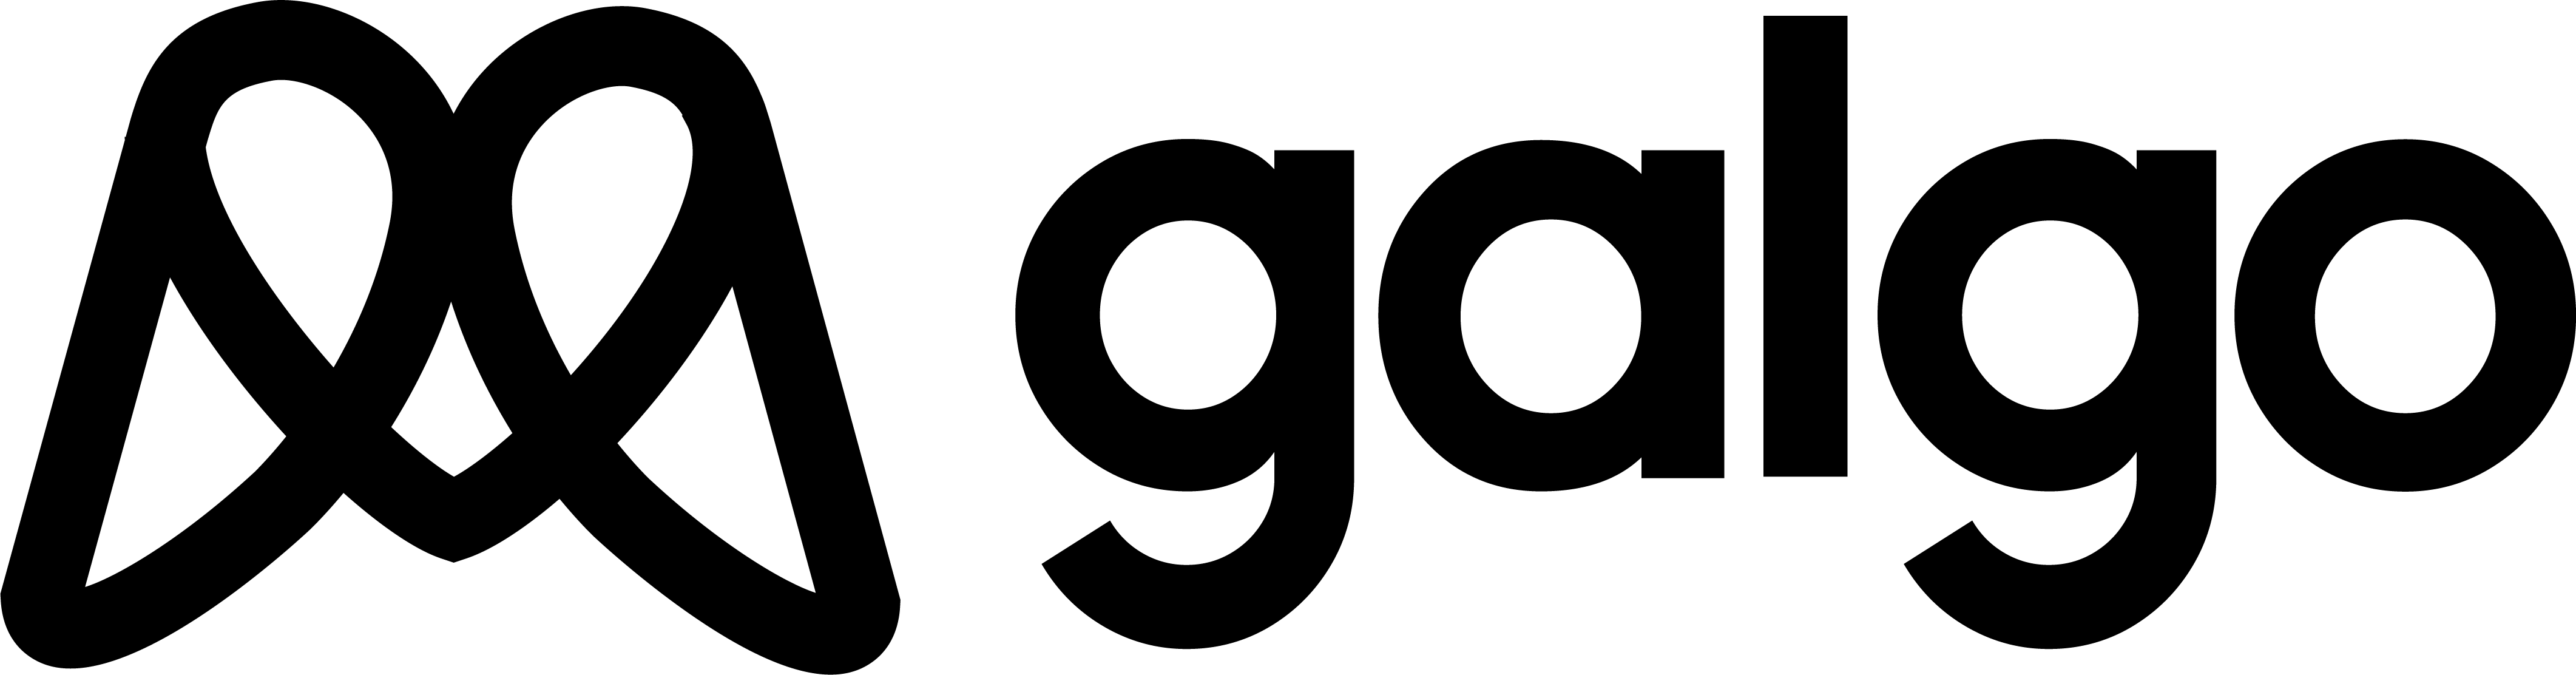 Logo Galgo Negro